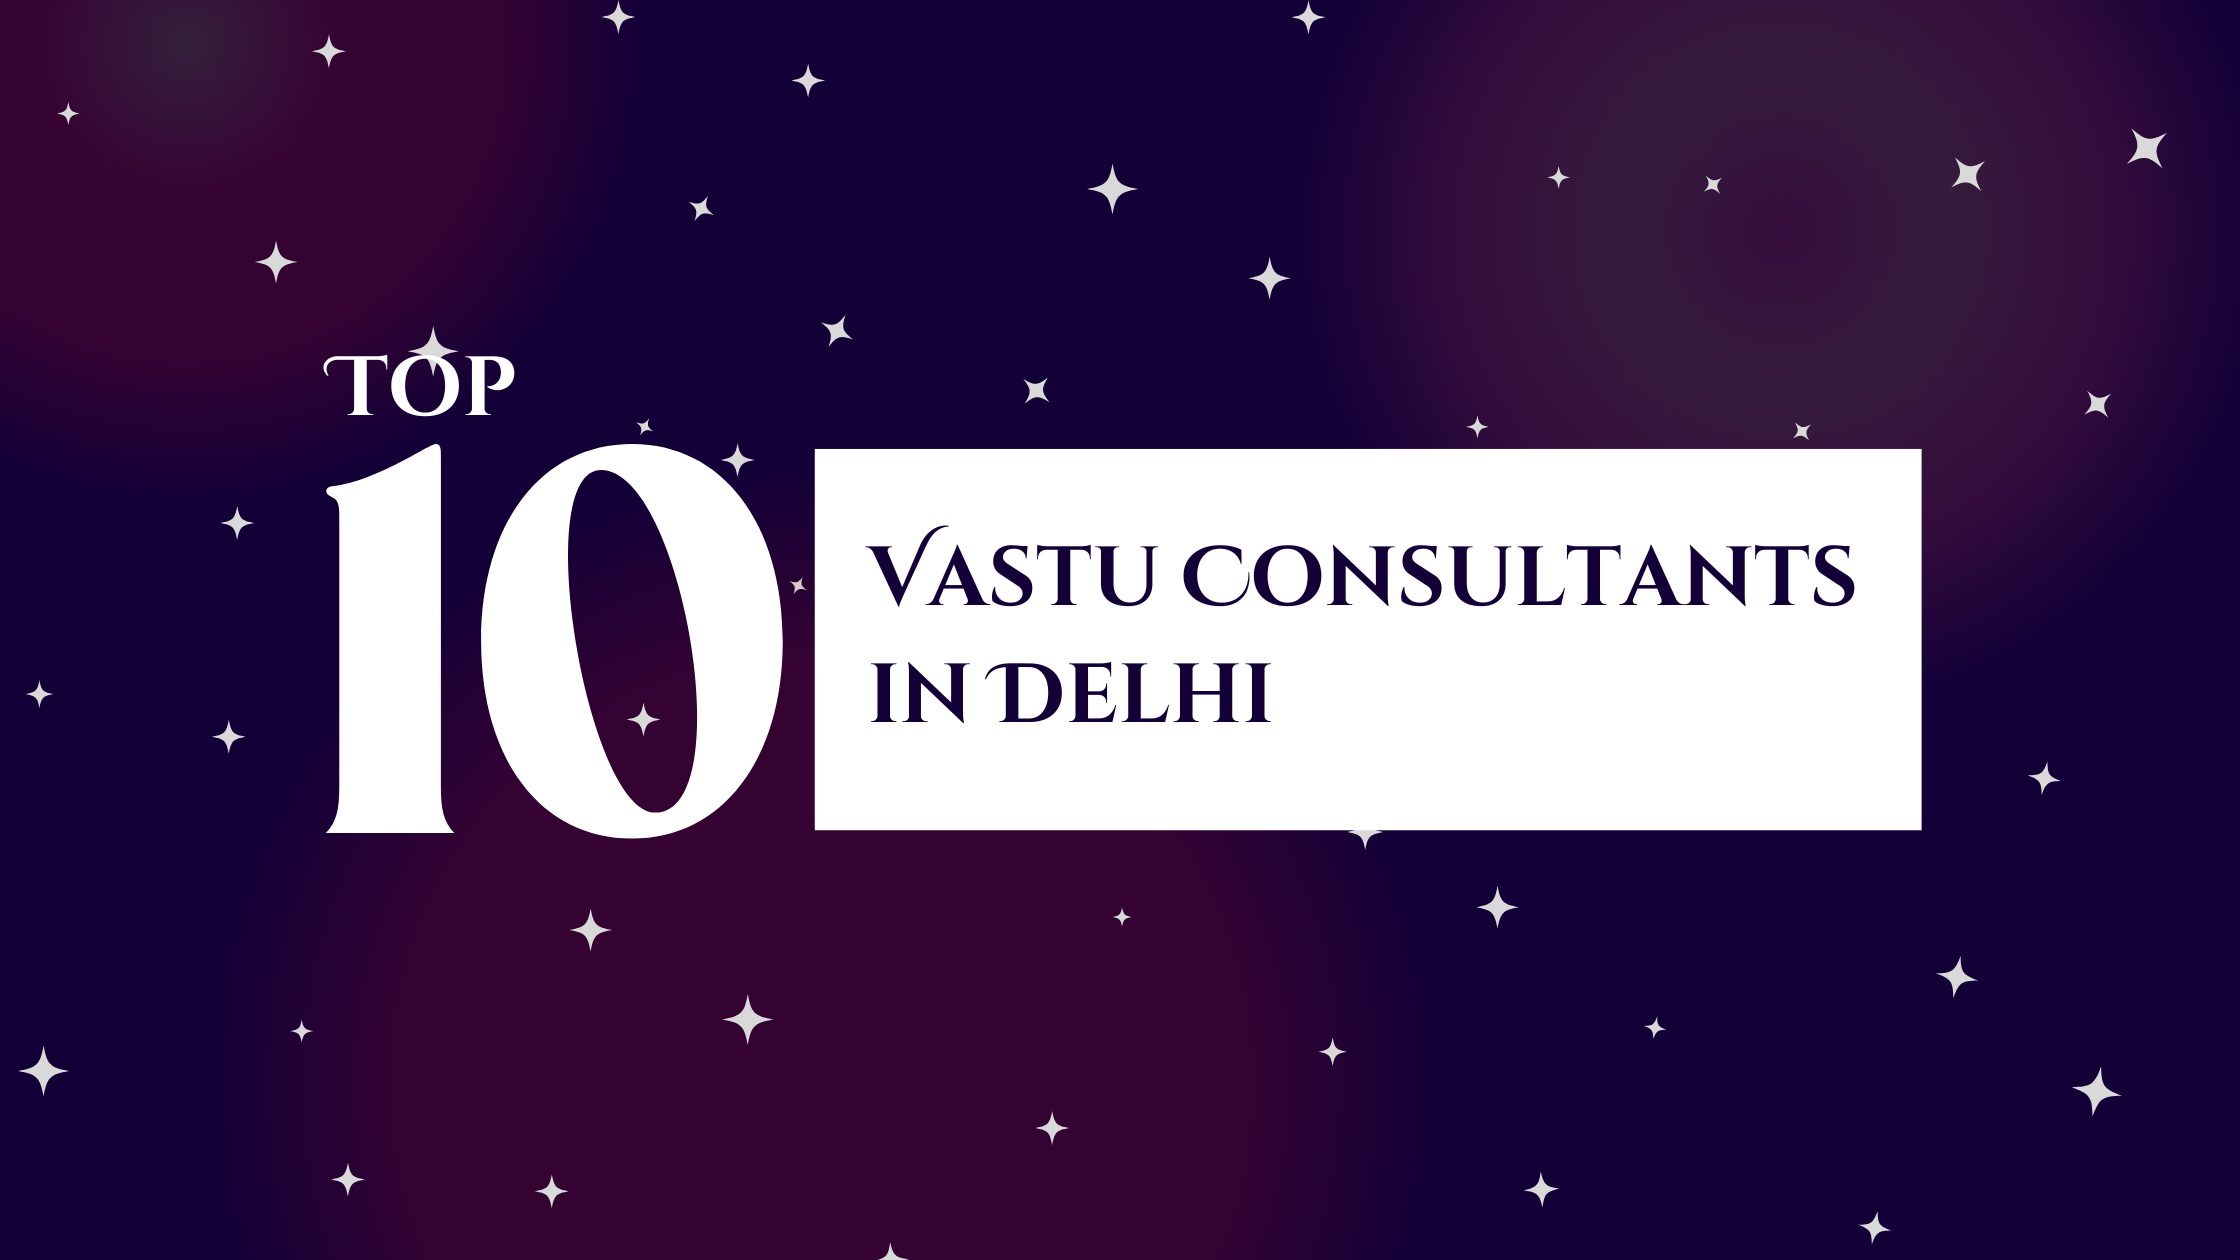 Top 10 Vastu Consultants in Delhi